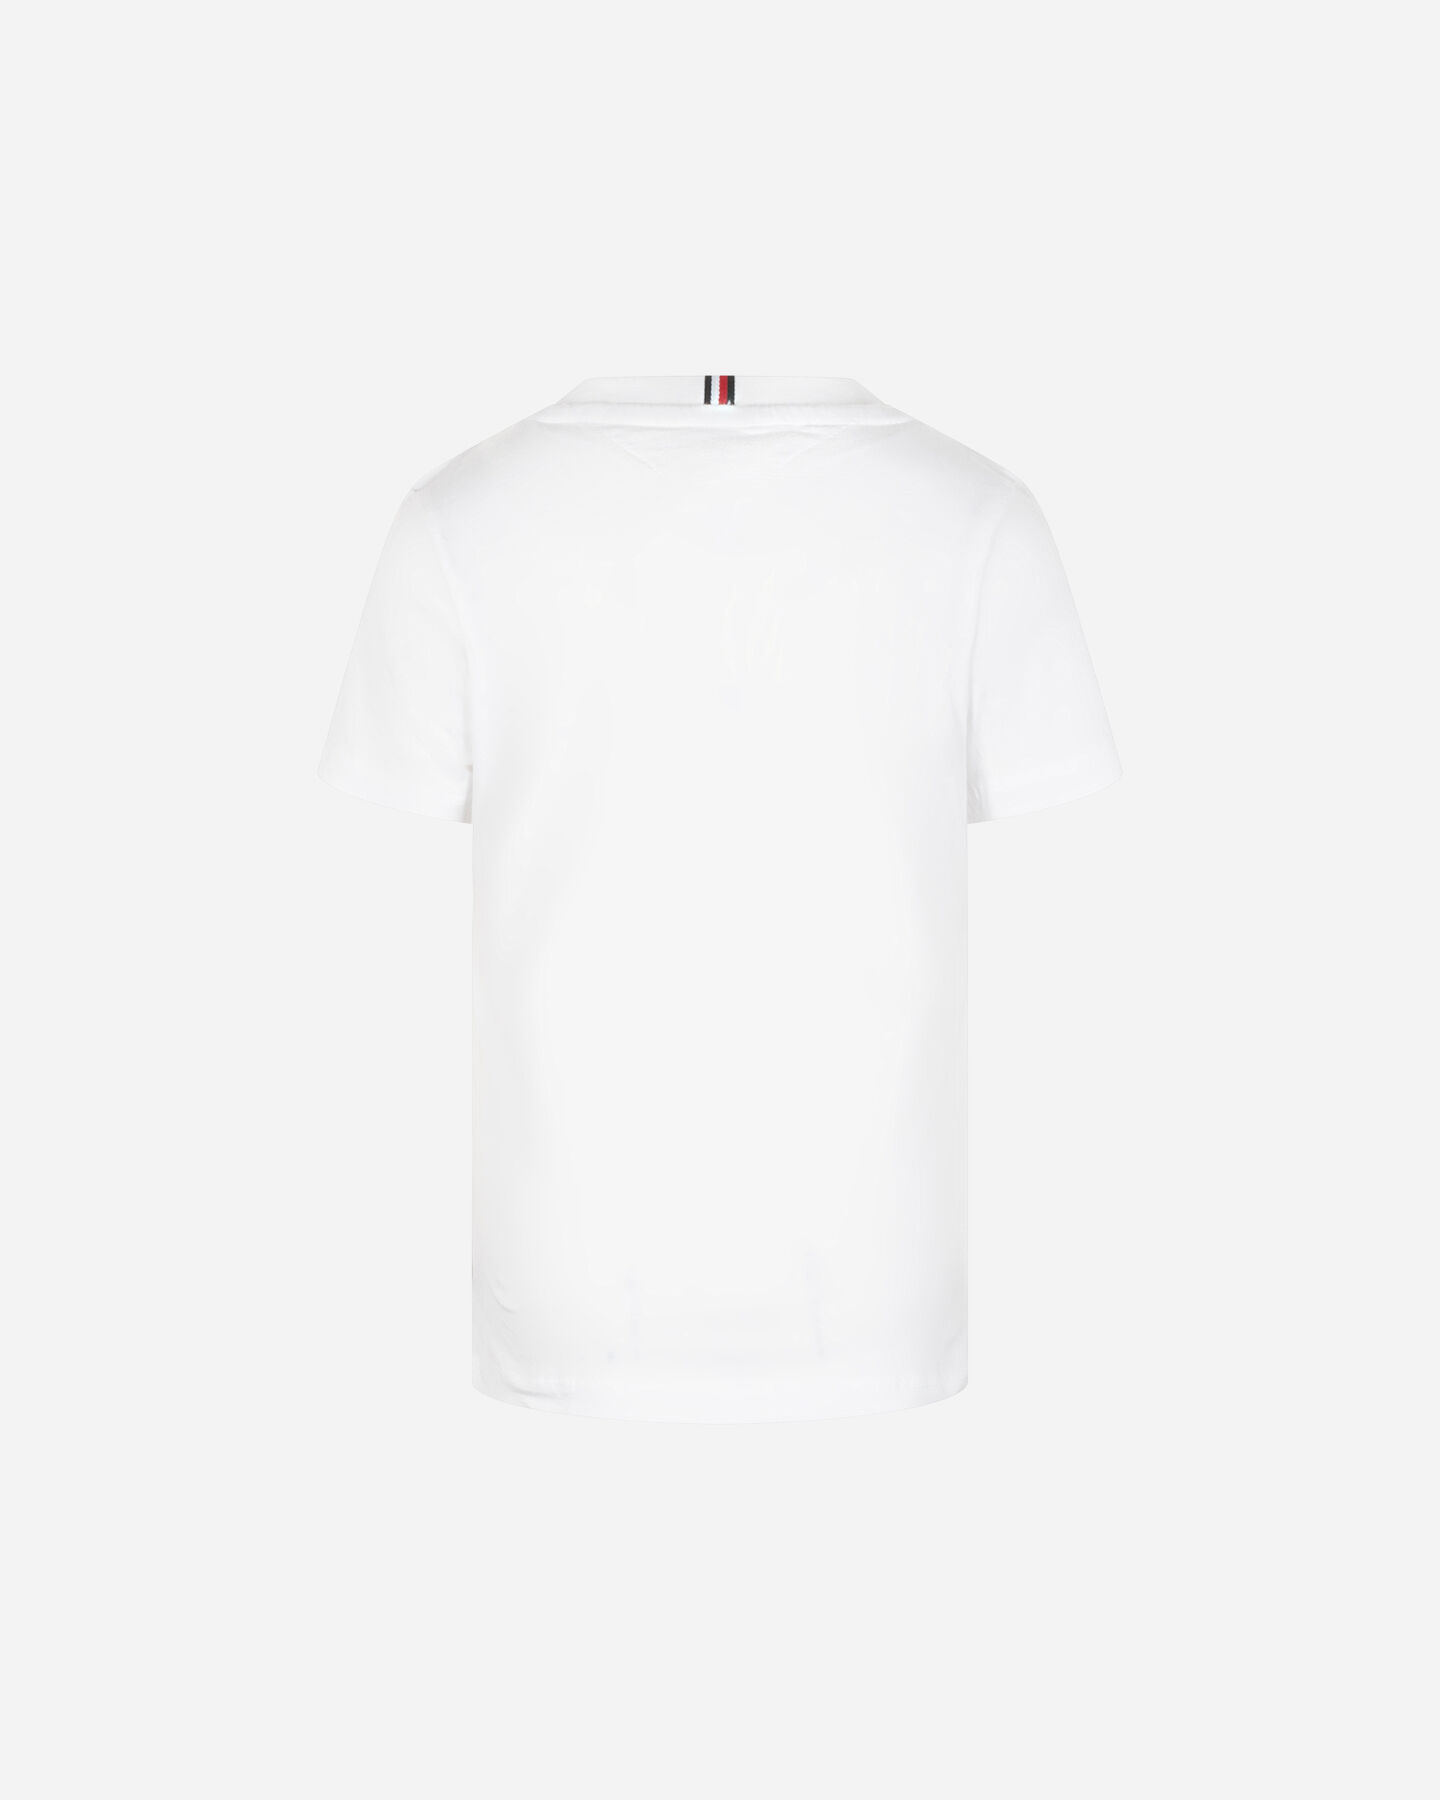  T-Shirt TOMMY HILFIGER POCKET JR S4131536|WHITE|8 scatto 1